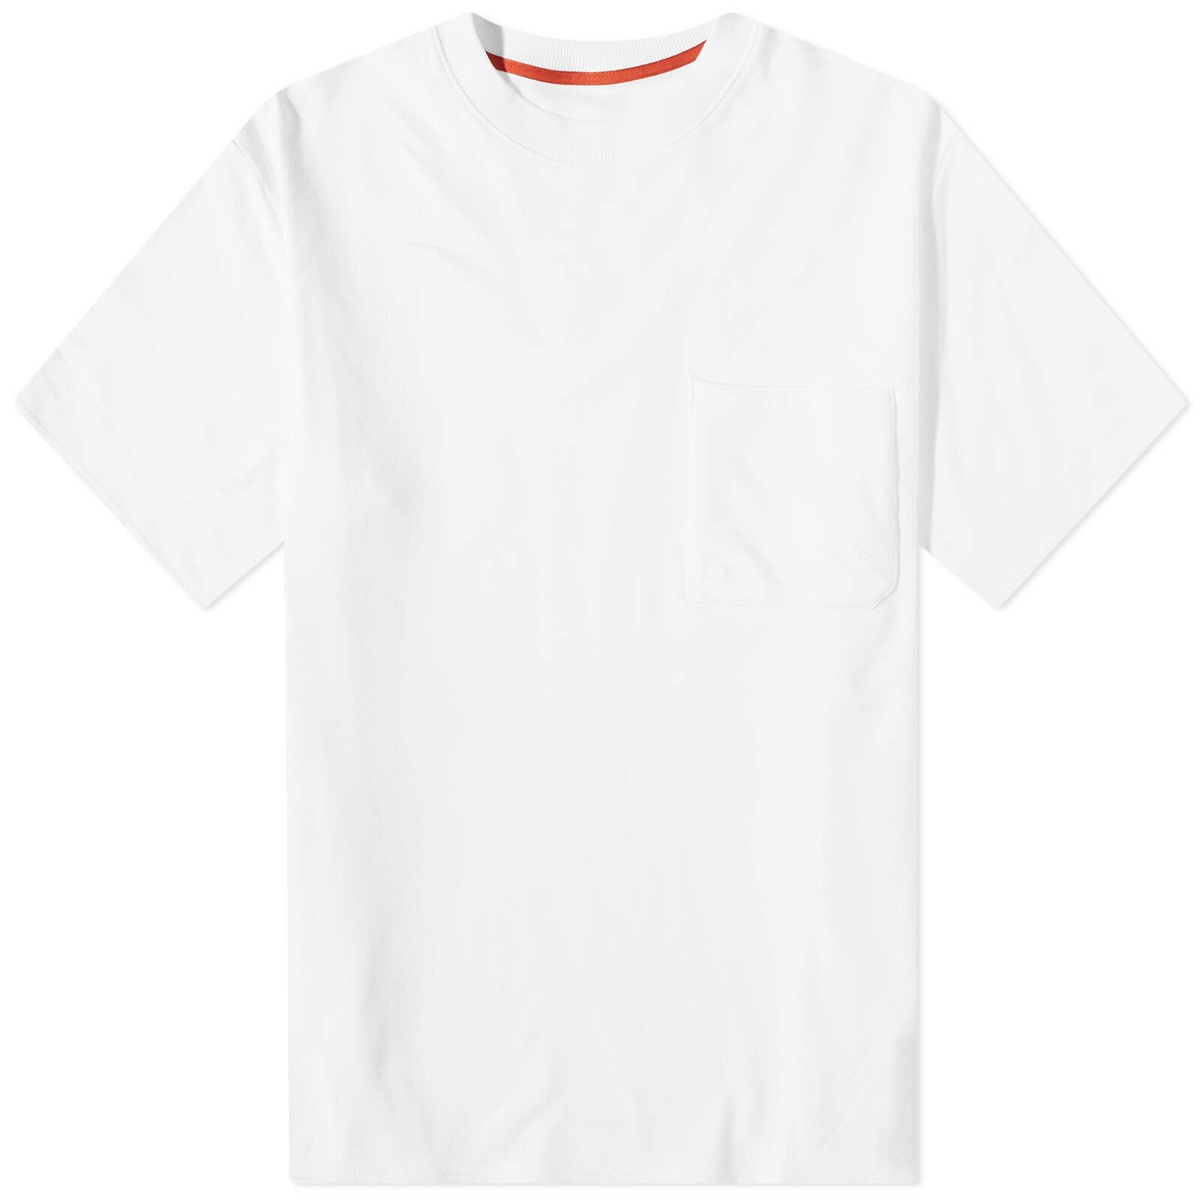 GOOPiMADE - “Archetype-93” 3D Pocket T-Shirt - Black